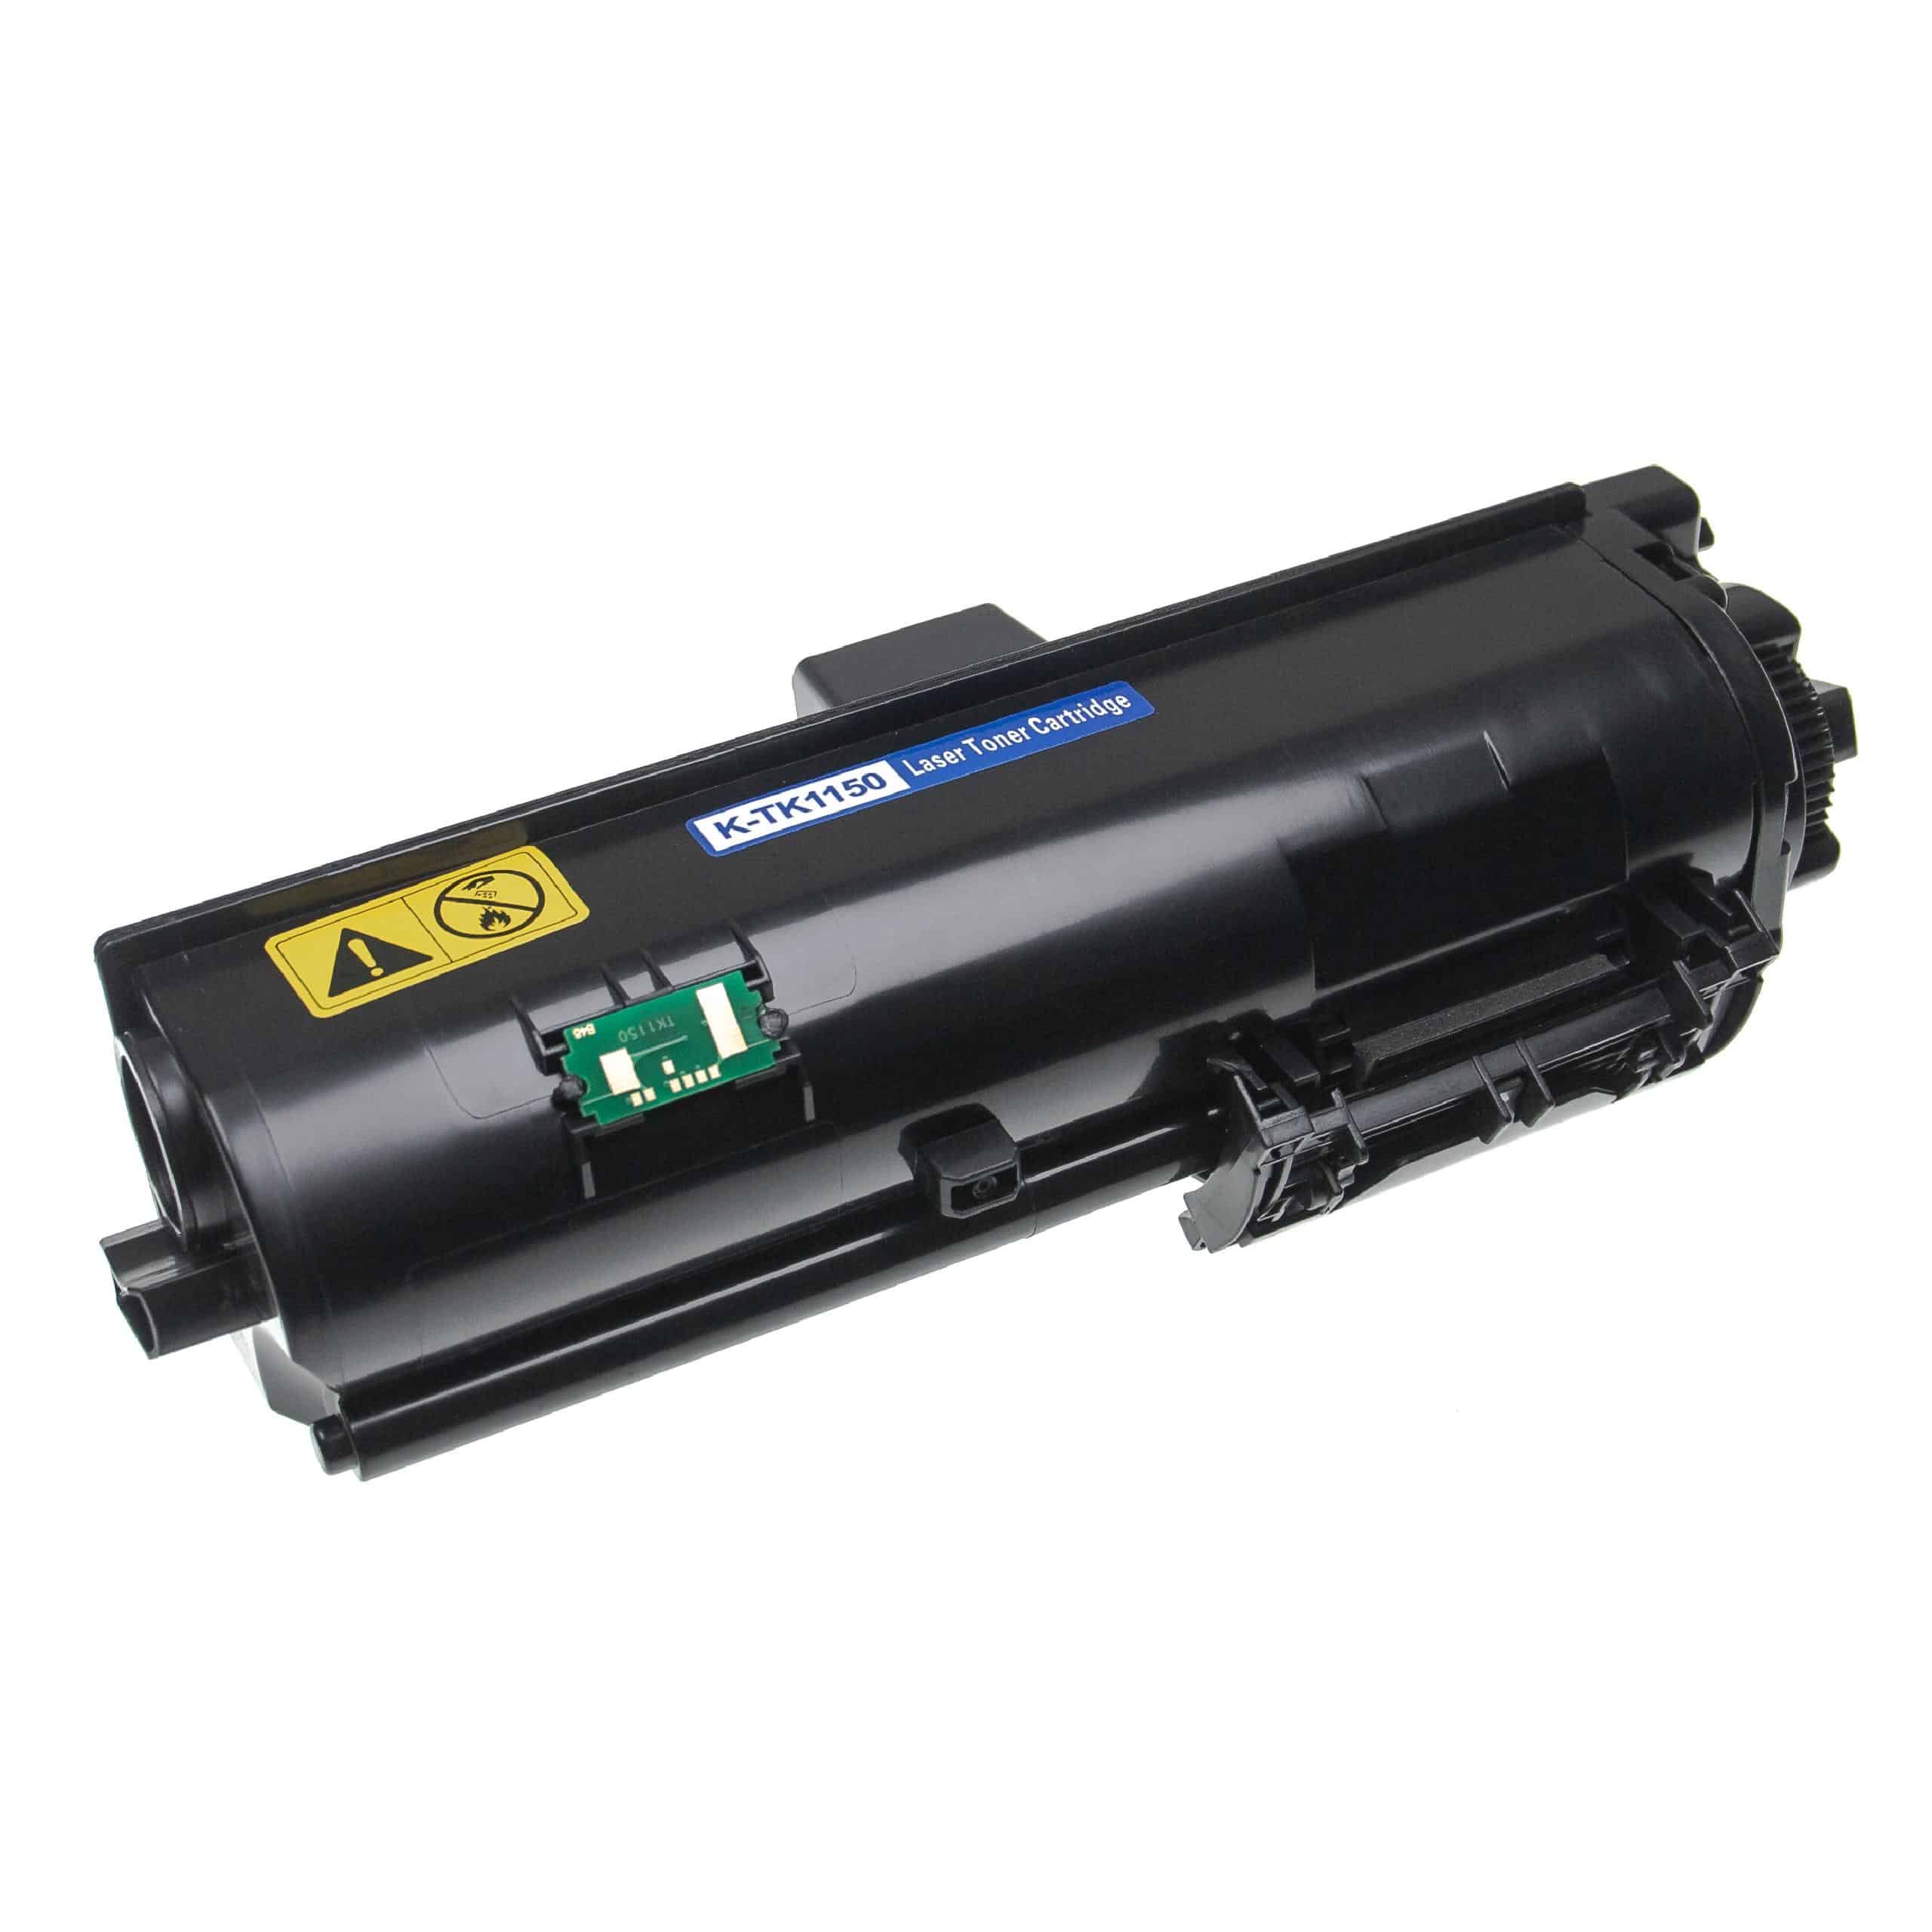 2x Toner replaces Kyocera TK-1150 for Kyocera Printer, Black